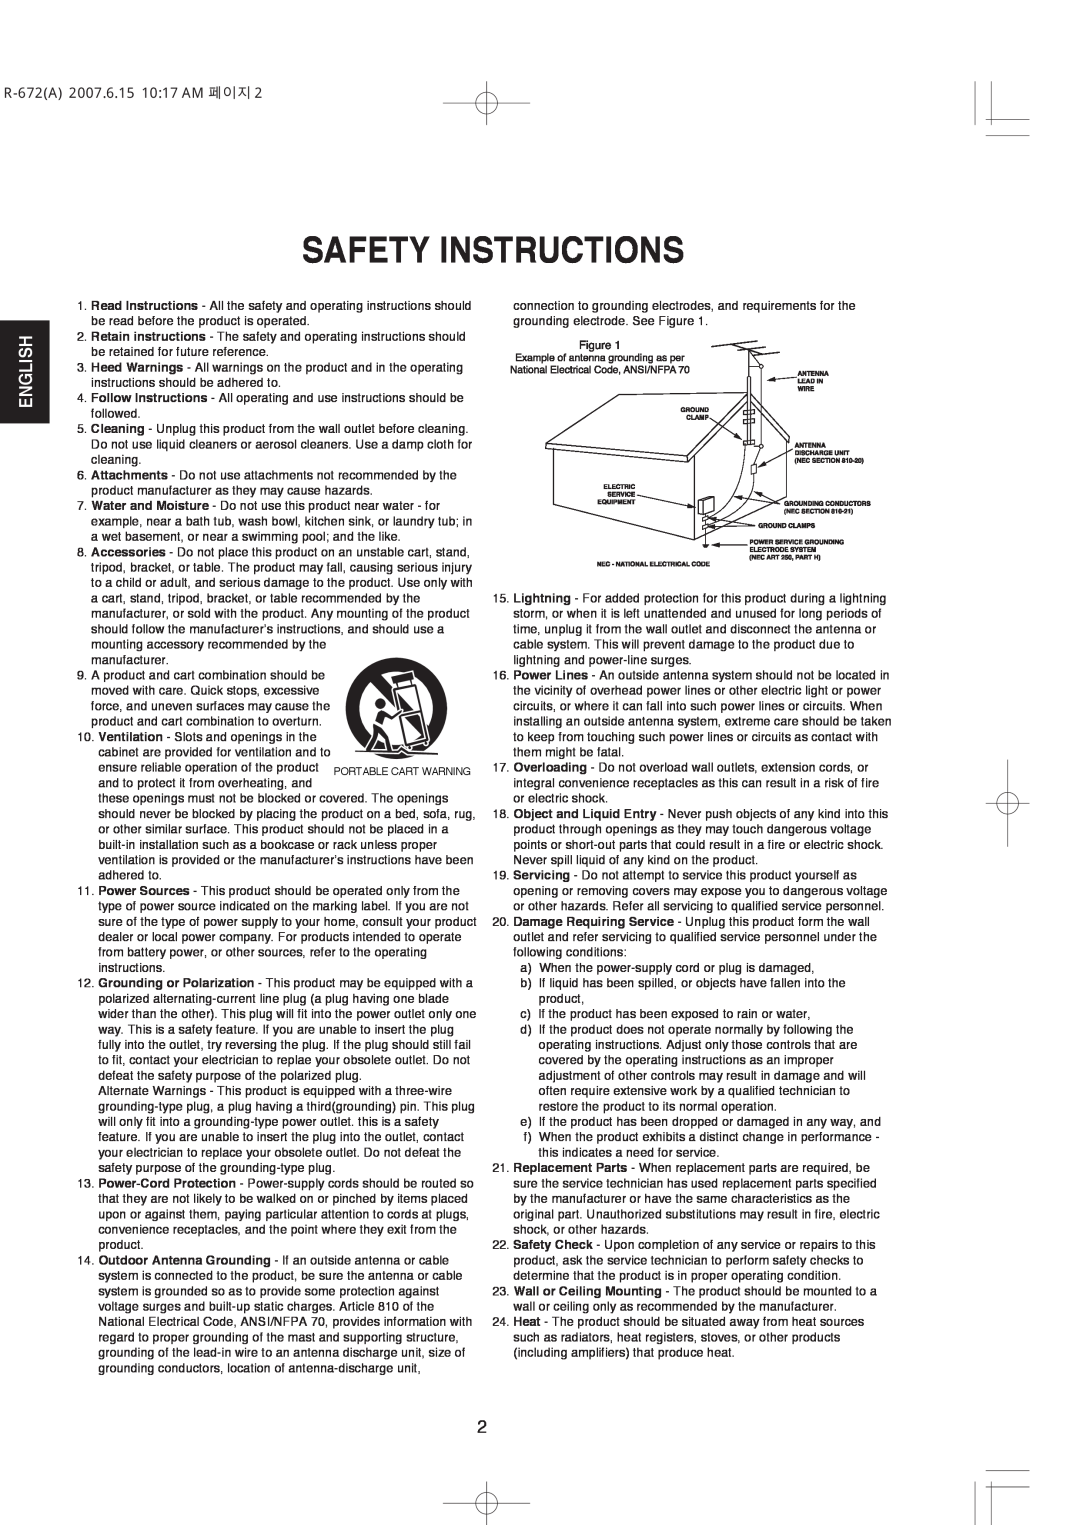 XM Satellite Radio manual English, R-672A2007.6.15 10 17 AM 페이지, Safety Instructions 